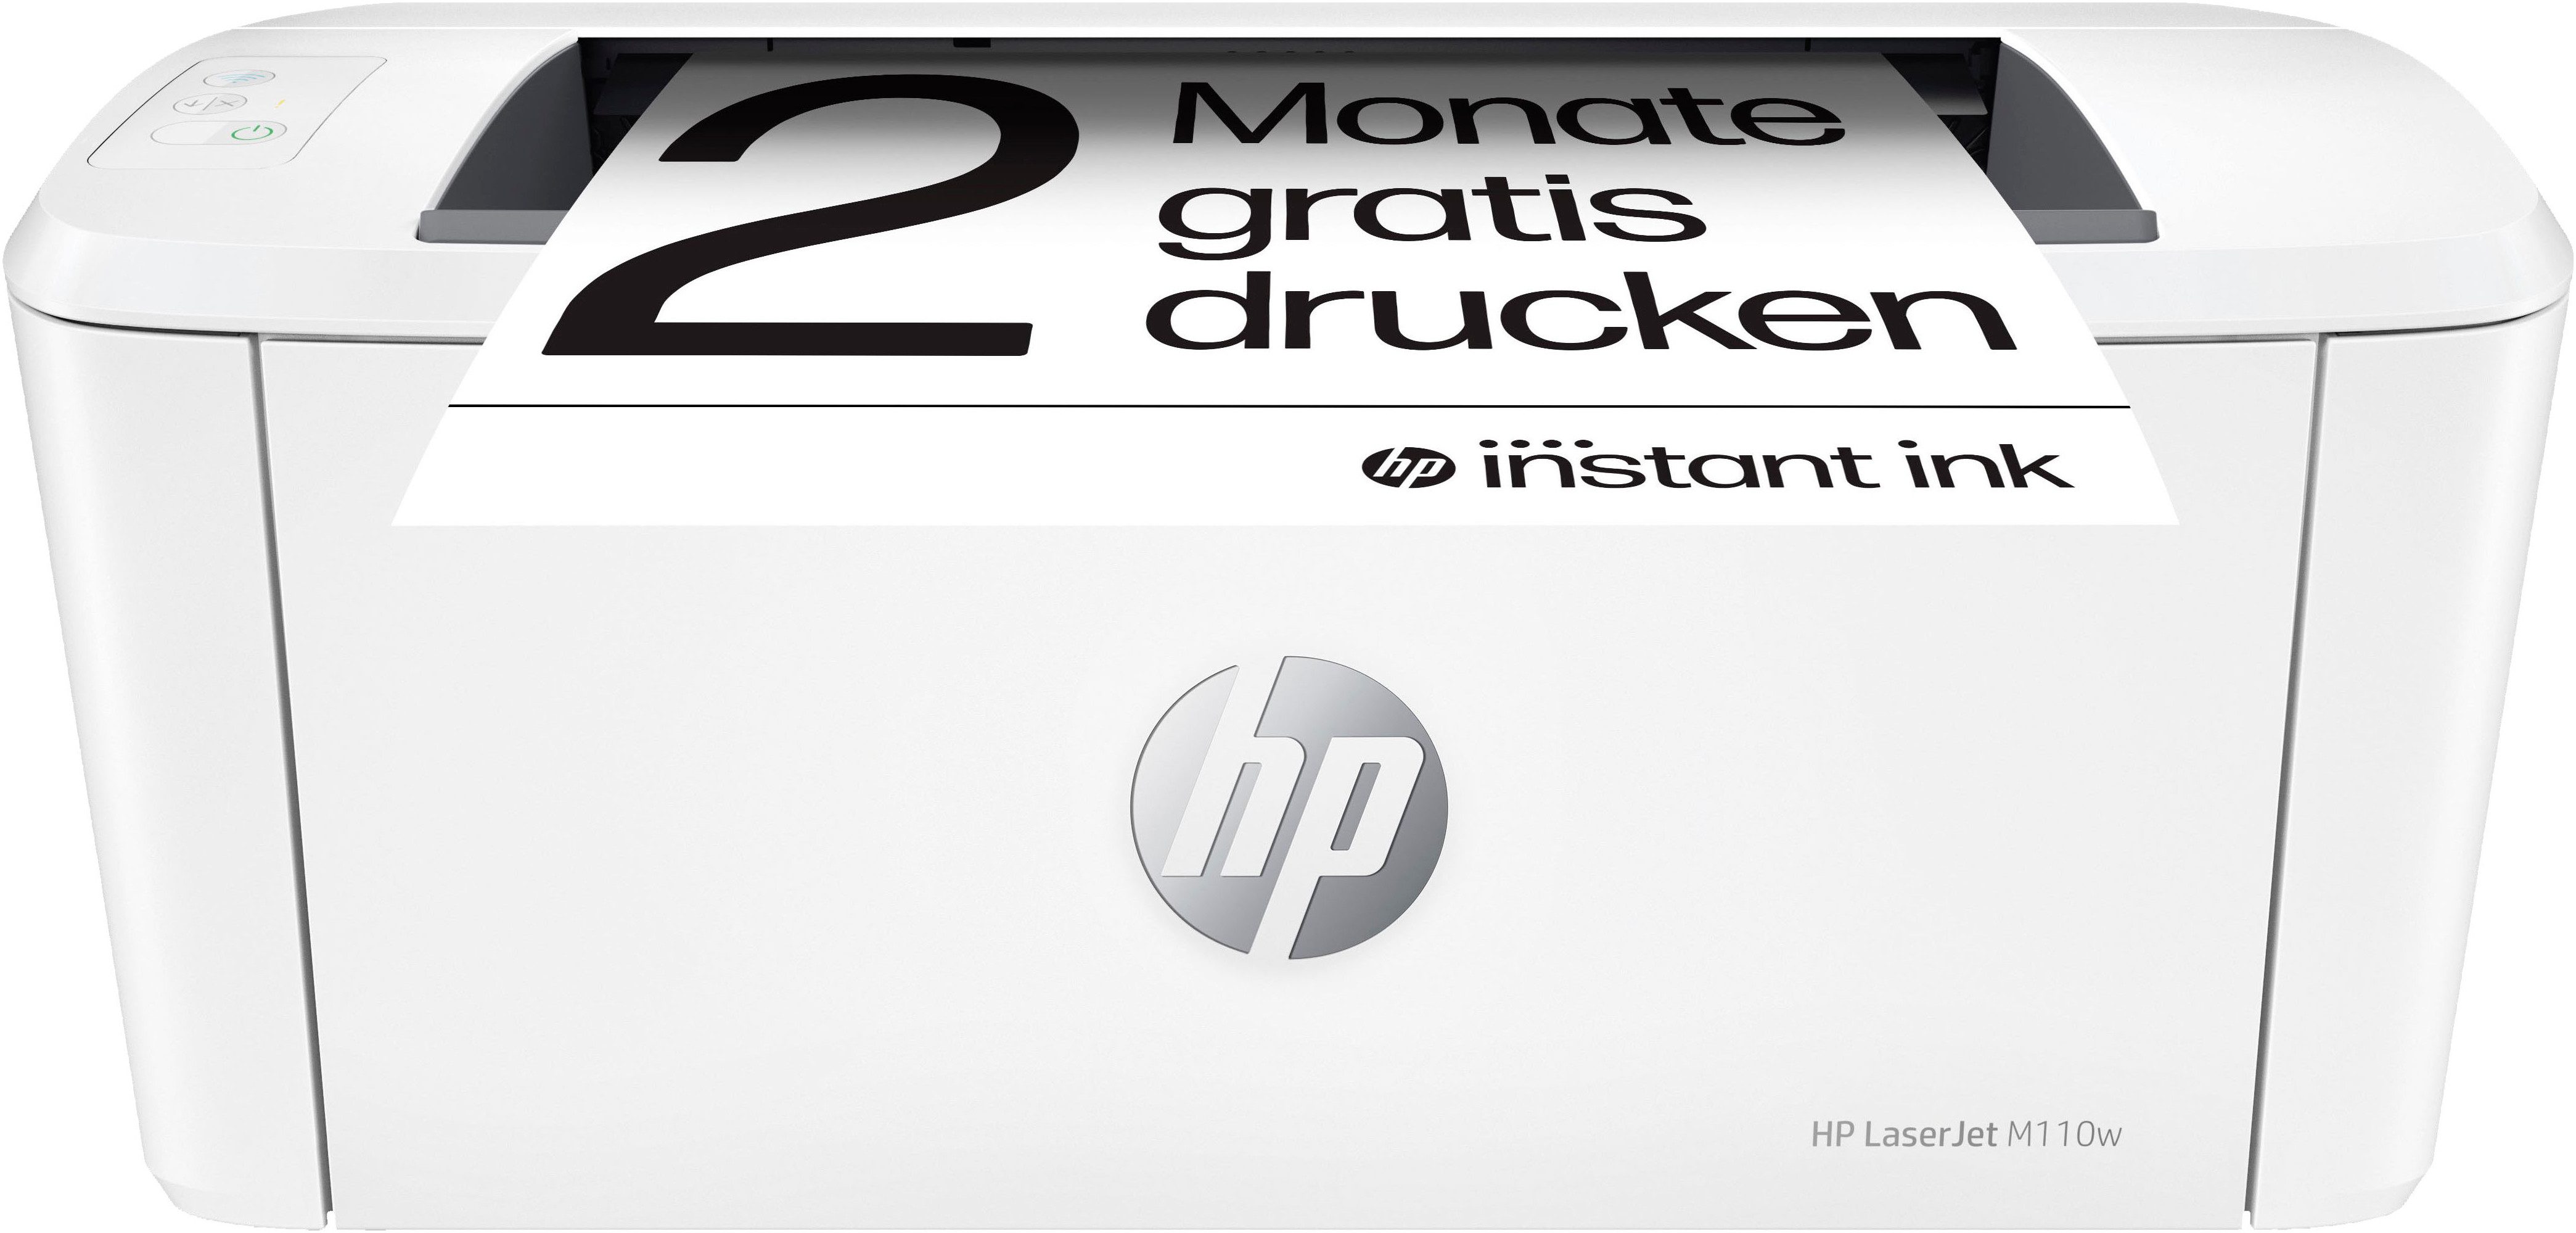 HP LaserJet M110w Schwarz-Weiß Laserdrucker, (Bluetooth, WLAN (Wi-Fi), Wi-Fi Direct, 2 Monate gratis Drucken mit HP Instant Ink inklusive)